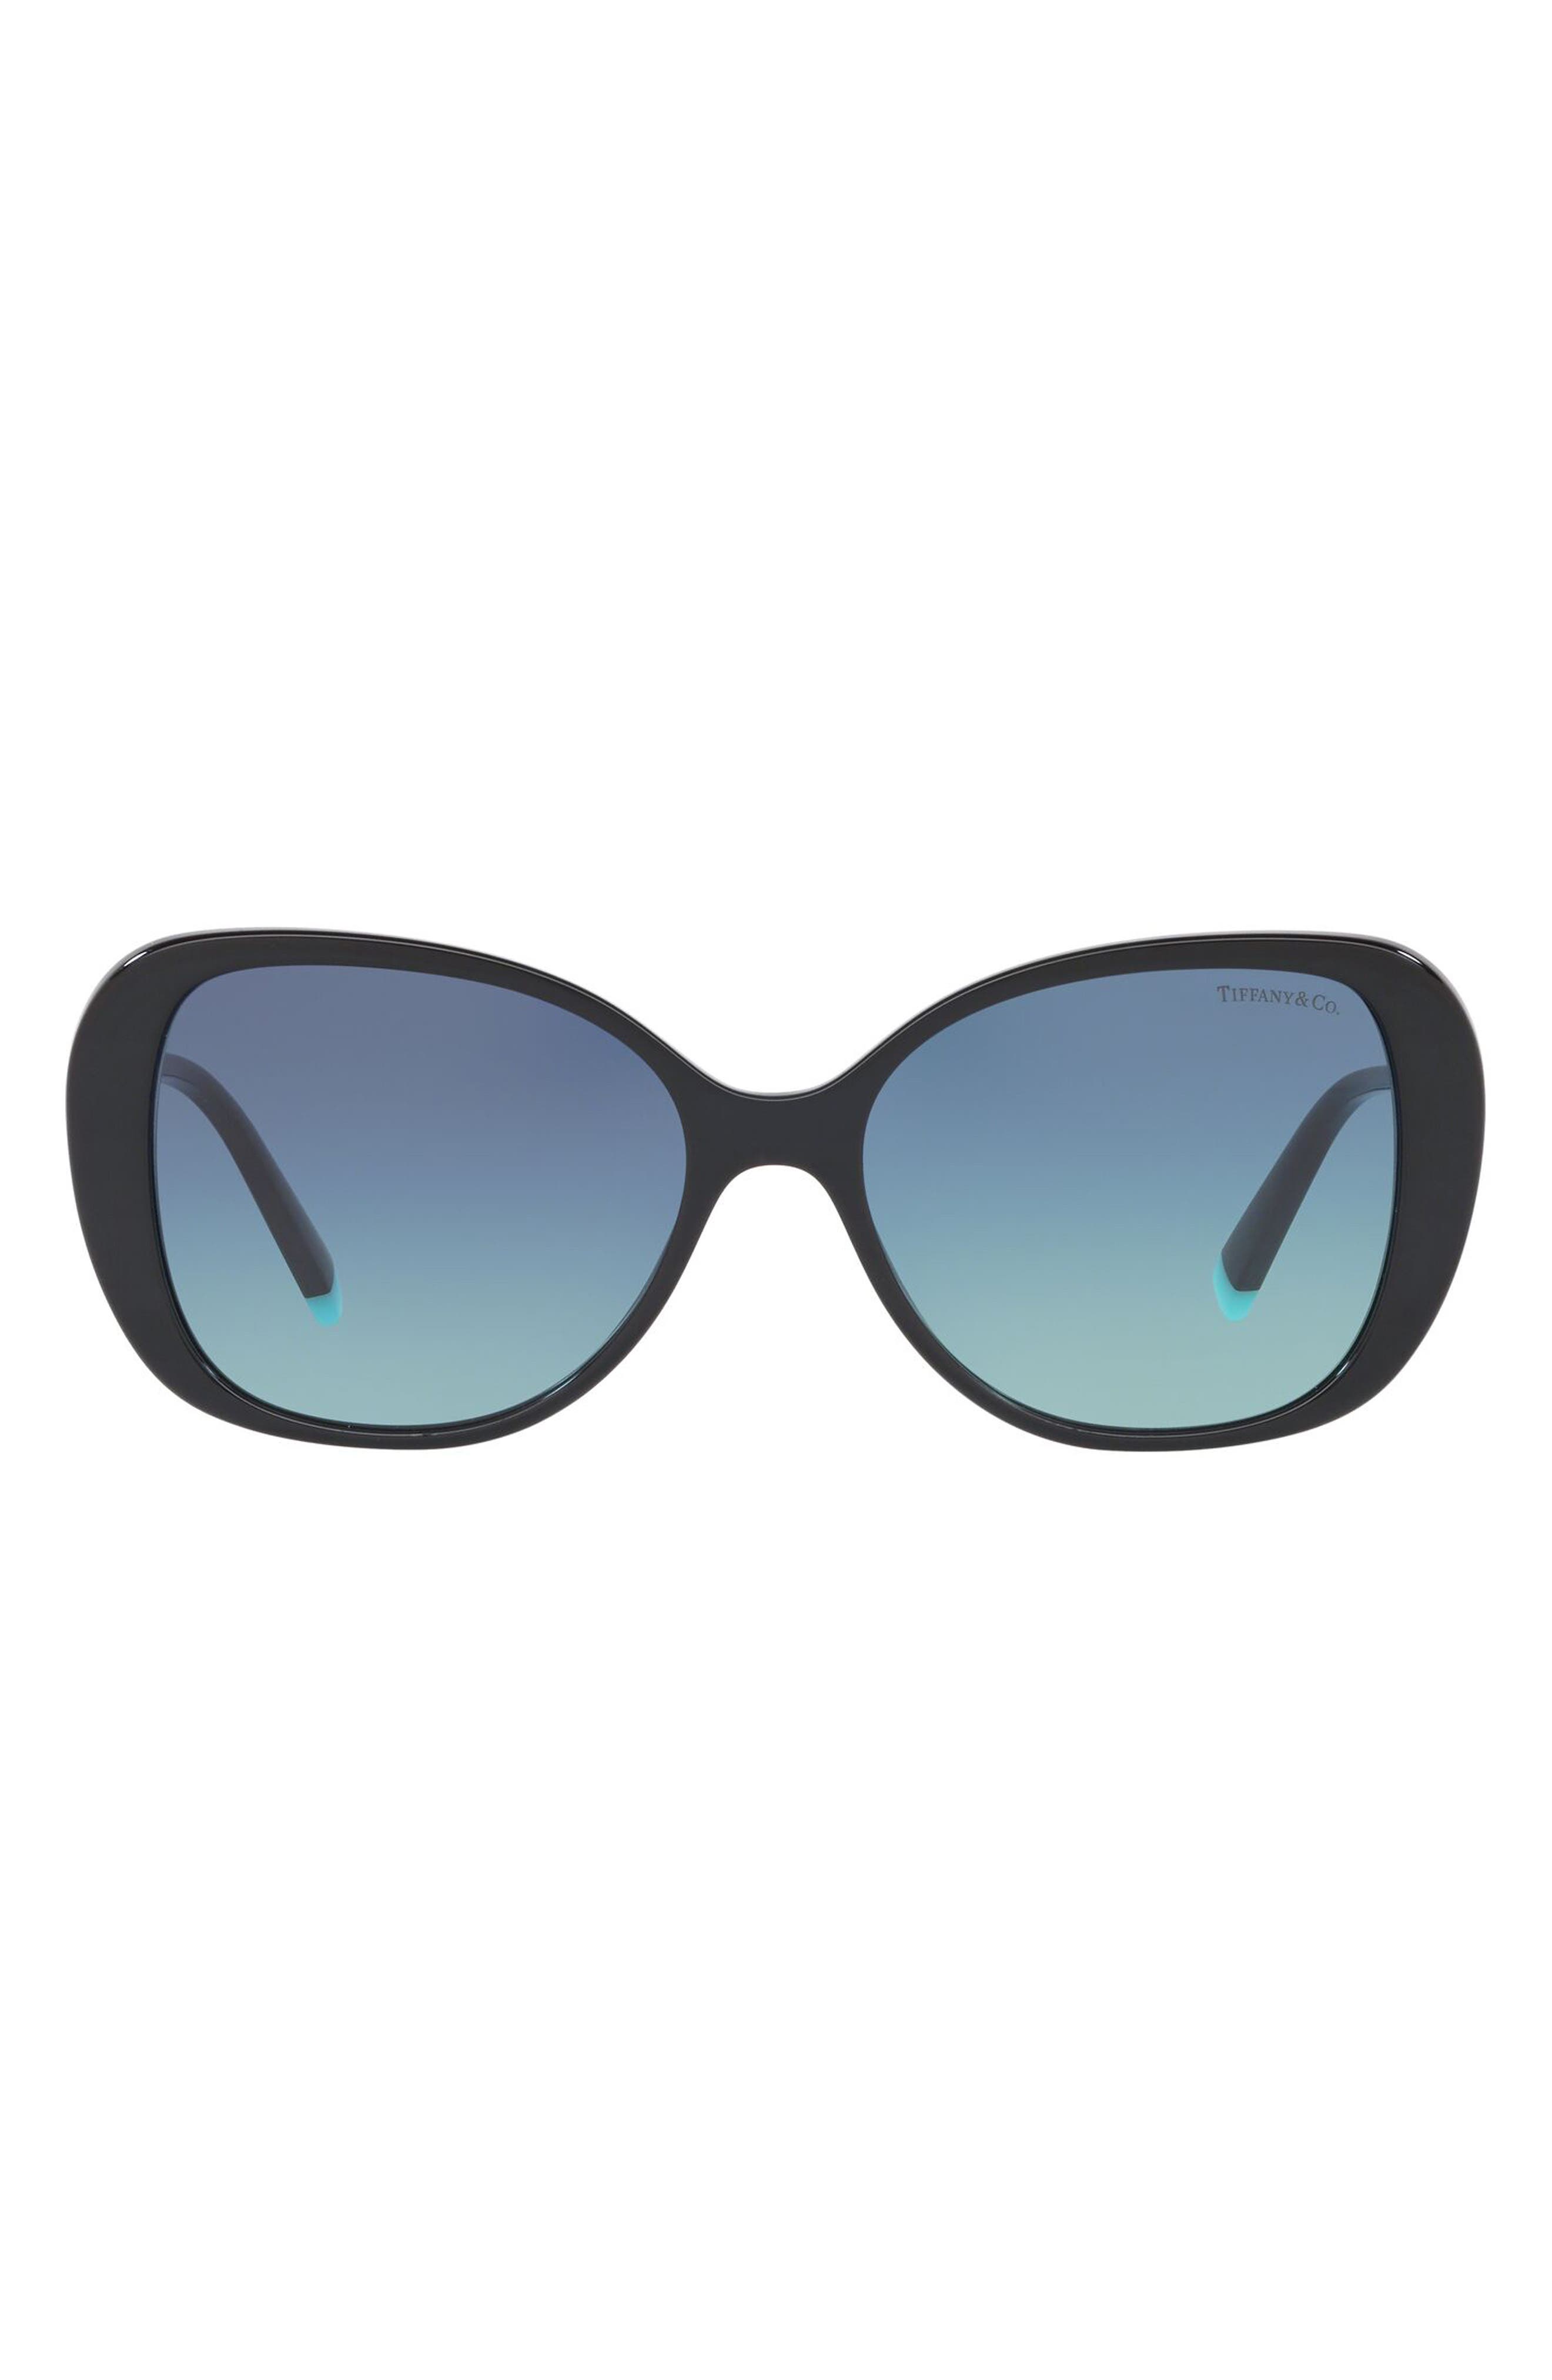 tiffany inspired sunglasses